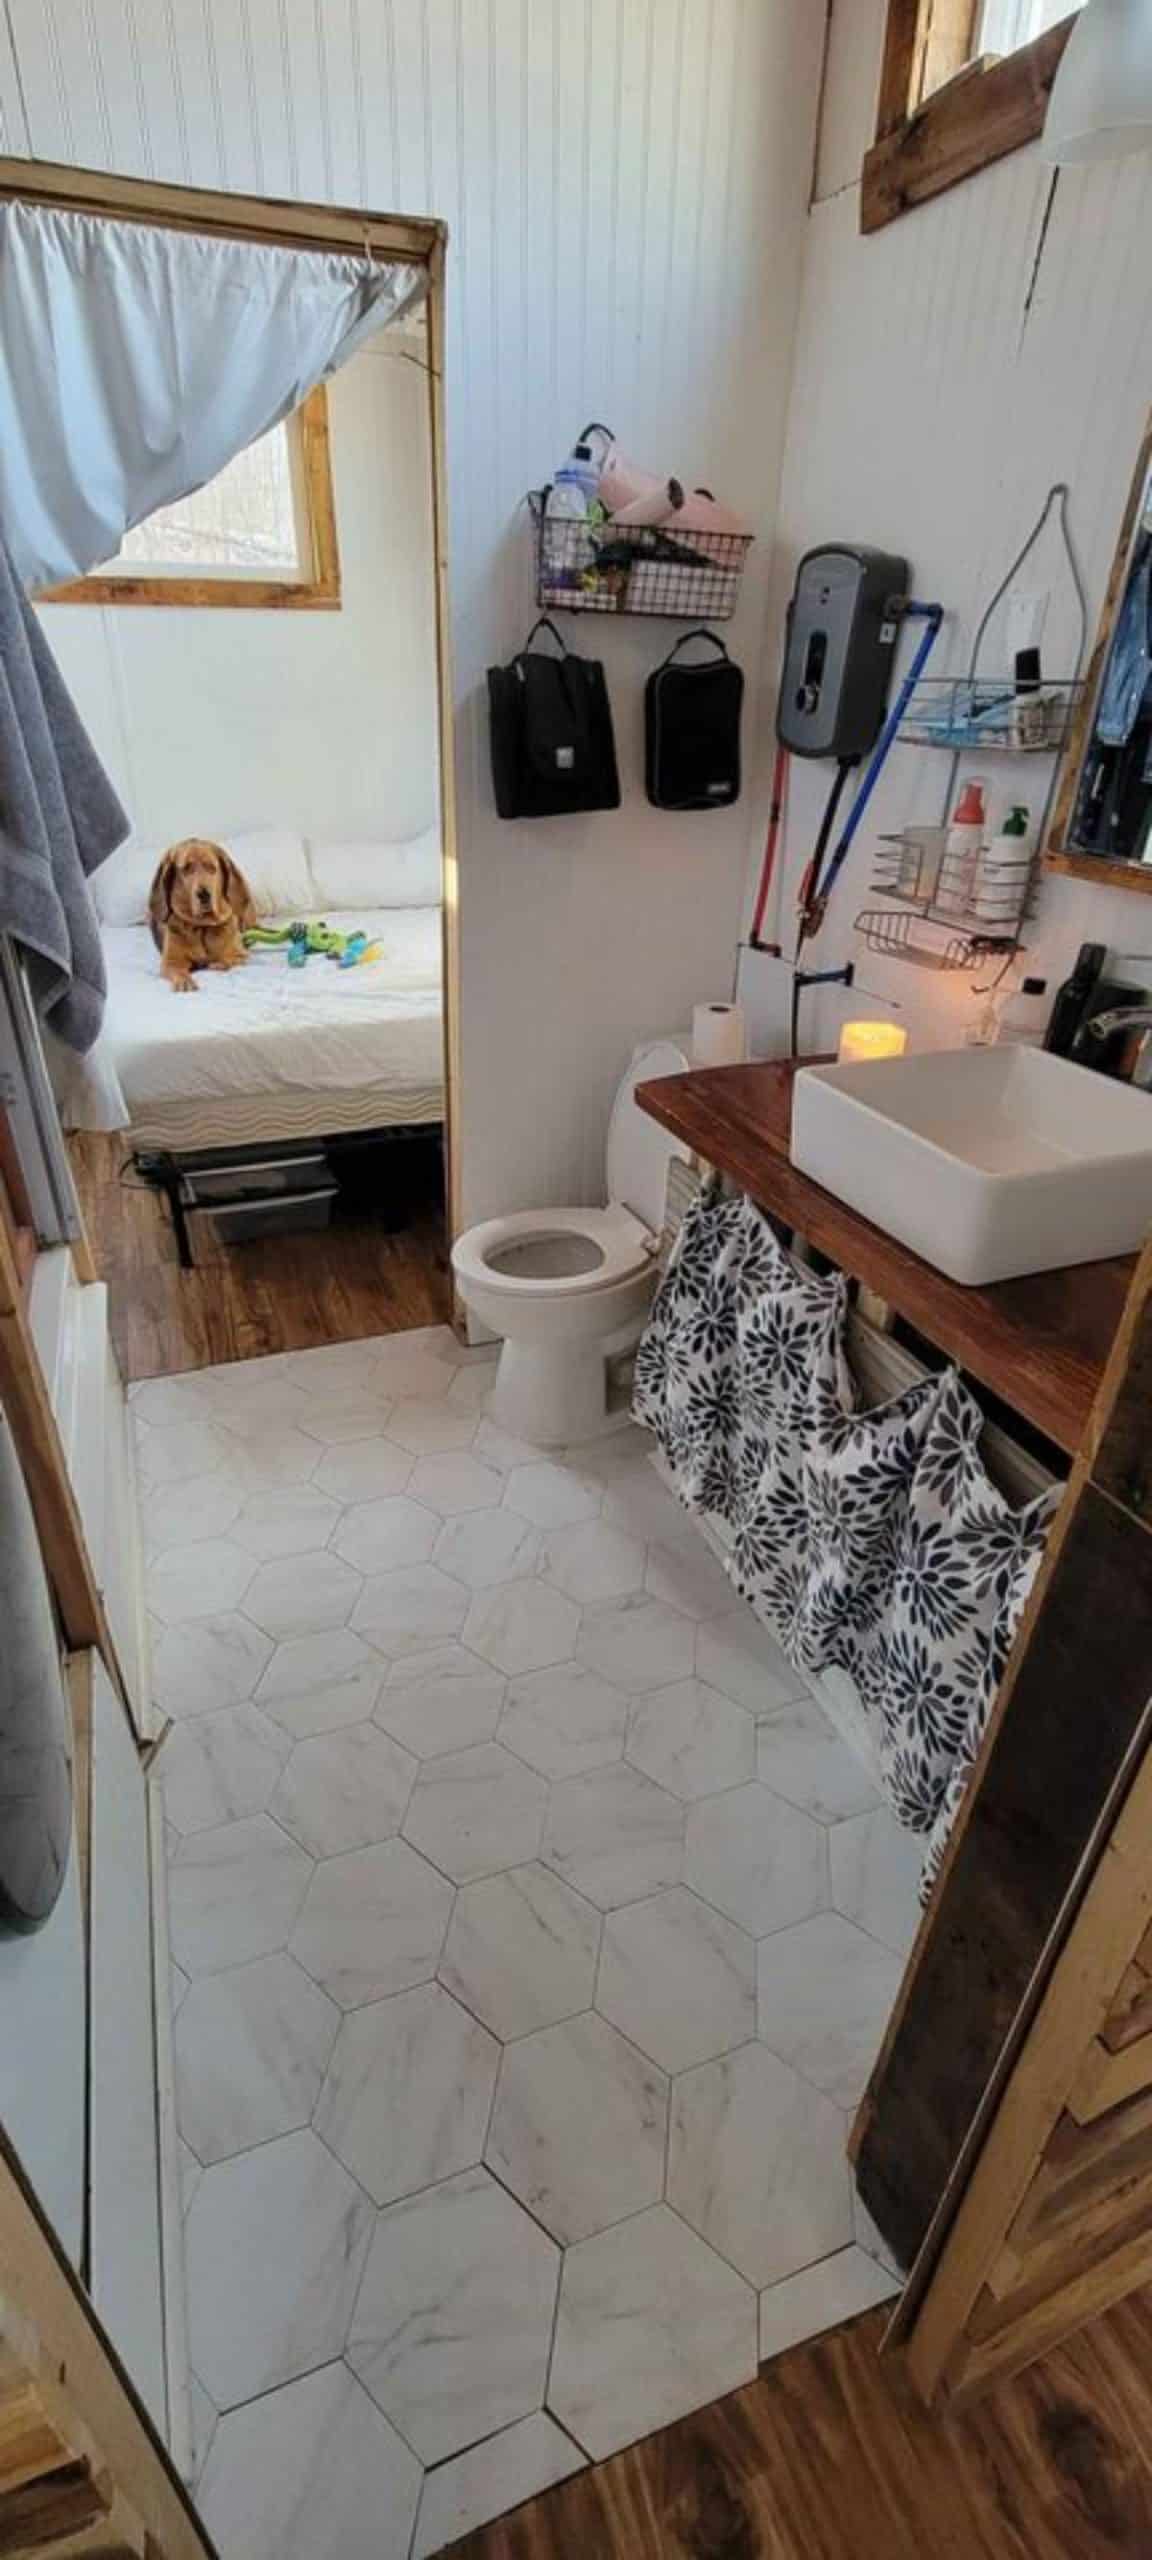 standard toilet in bathroom